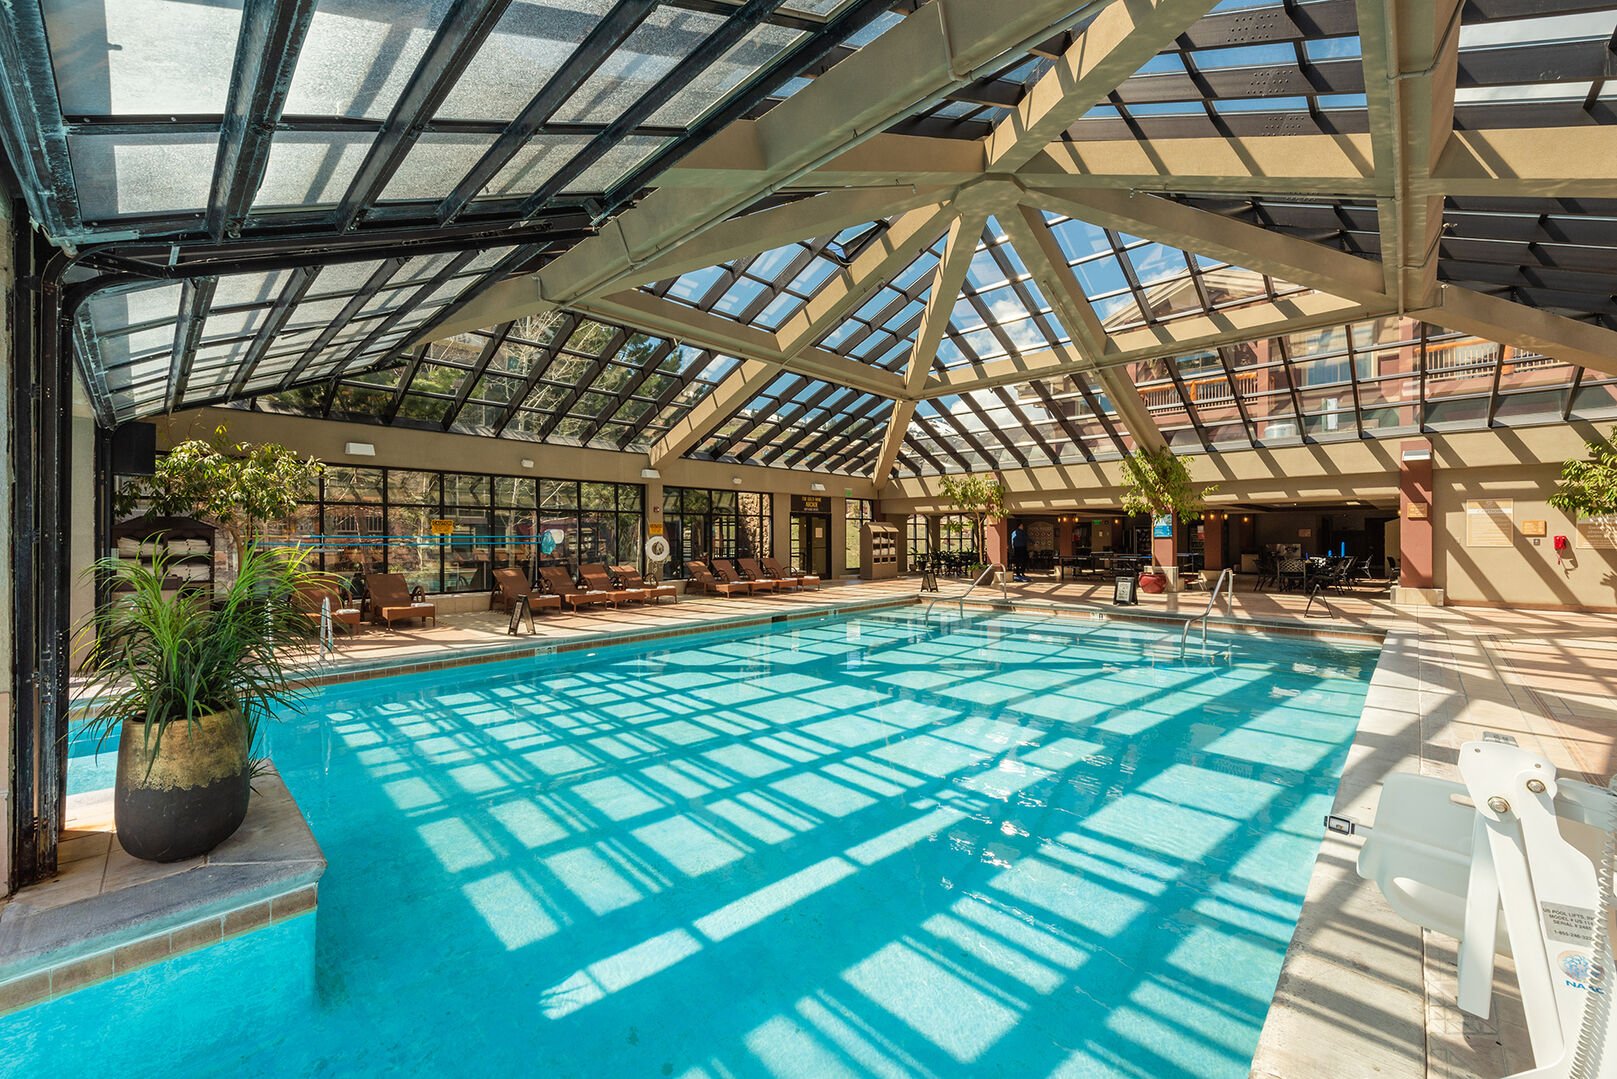 Main pool (indoor/outdoor heated)